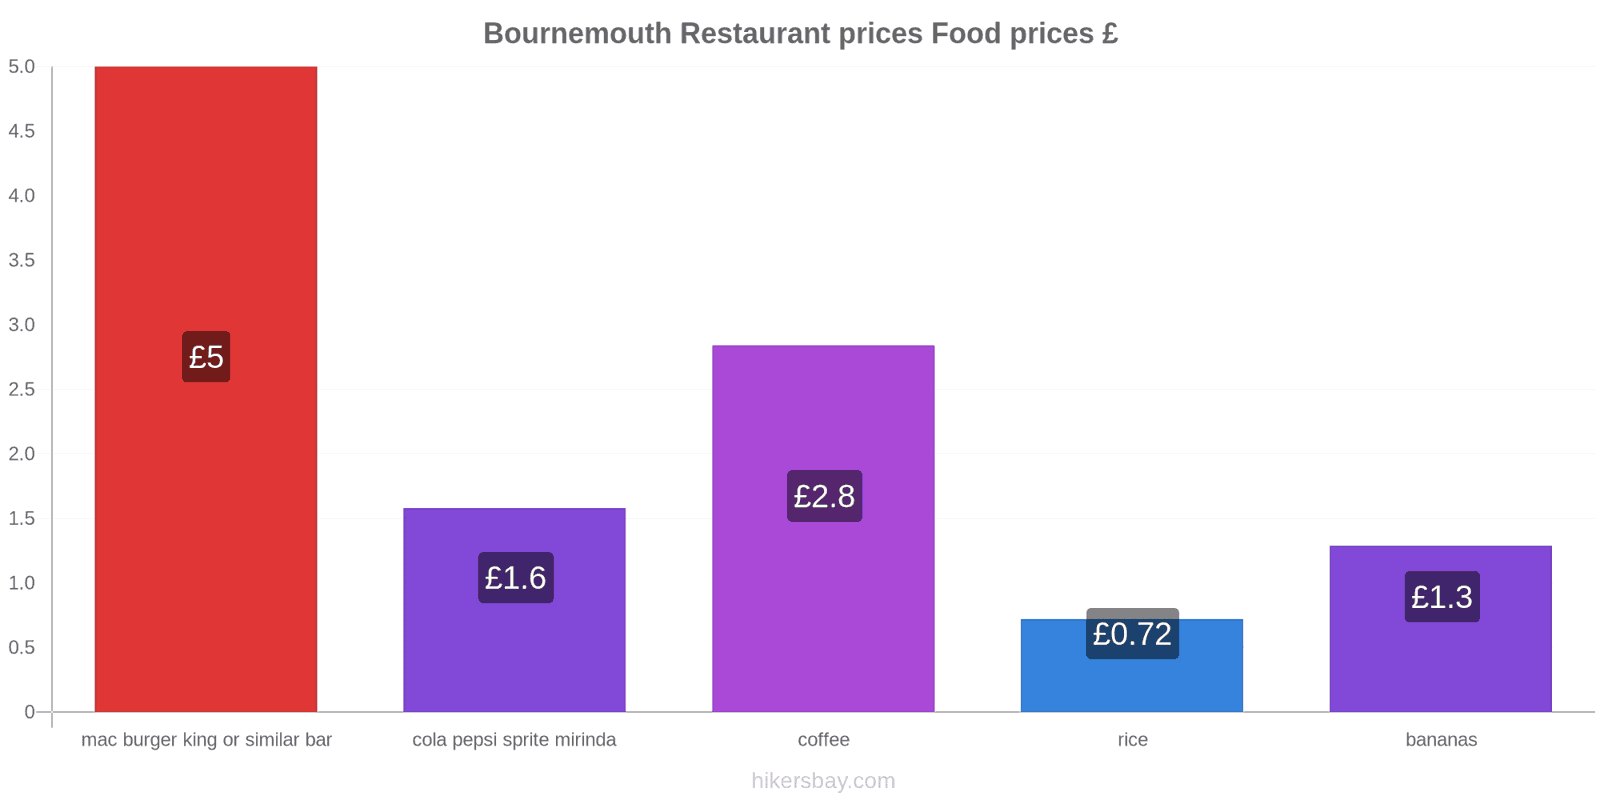 Bournemouth price changes hikersbay.com